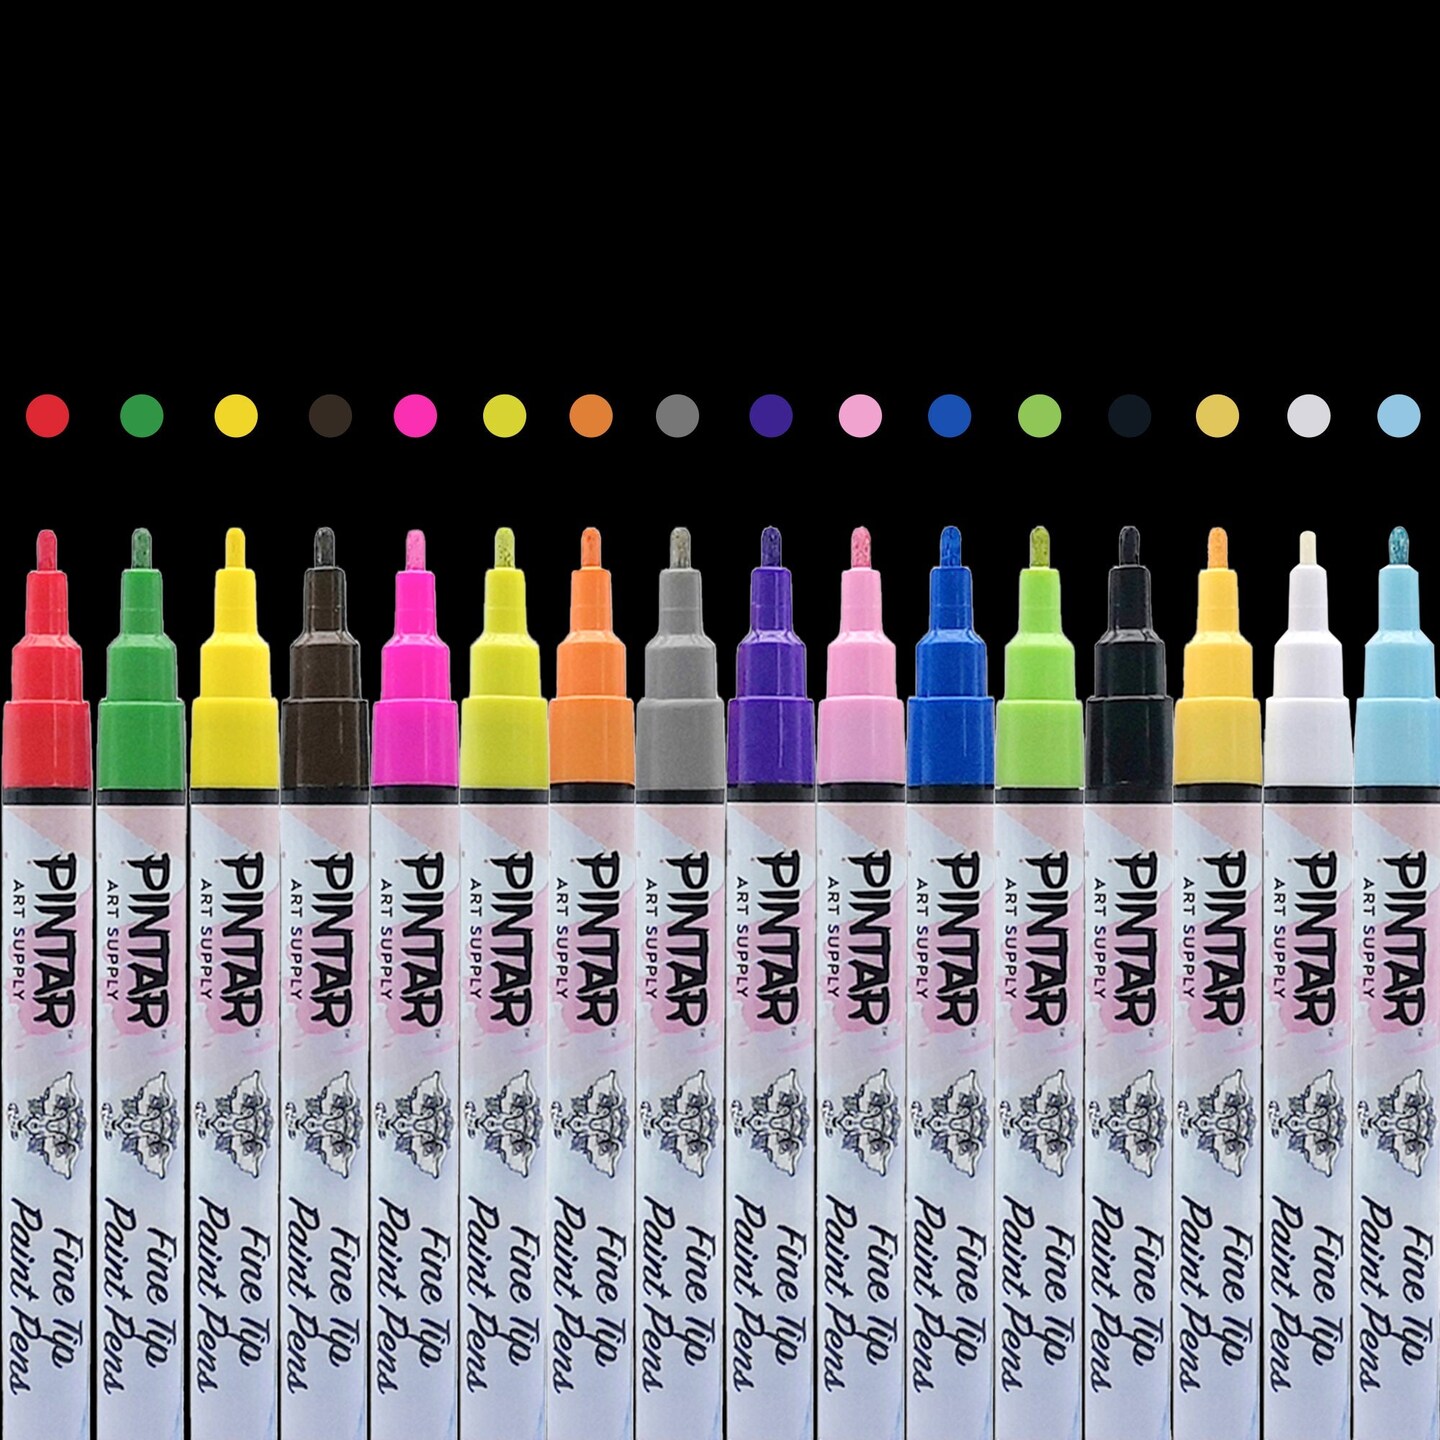 PINTAR Premium Acrylic Paint Pens - 1mm Fine Tip Pens For Rock Painting, Ceramic Glass, Wood, Paper, Fabric &#x26; Porcelain, Water Resistant Paint Set, Surface Pen, Craft Supplies, DIY Project (16 colors)